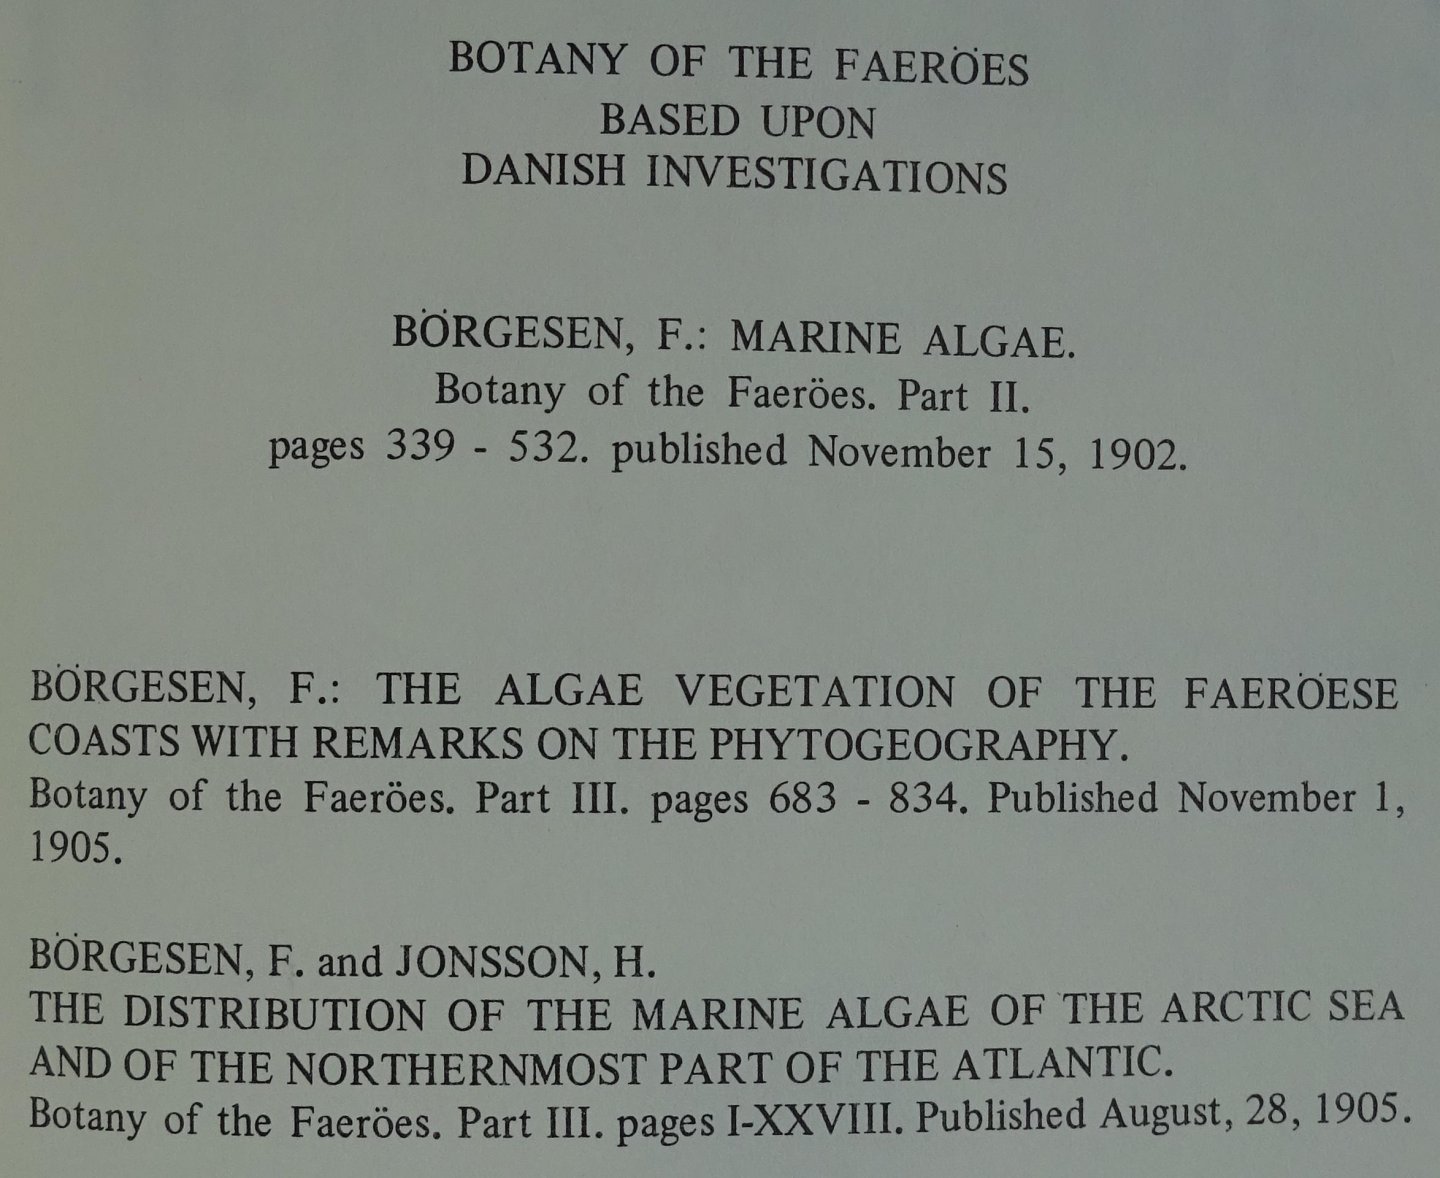 Borgesen, F. - Algae from the Faeroes. REPRINT [ isbn 9061050111 ]